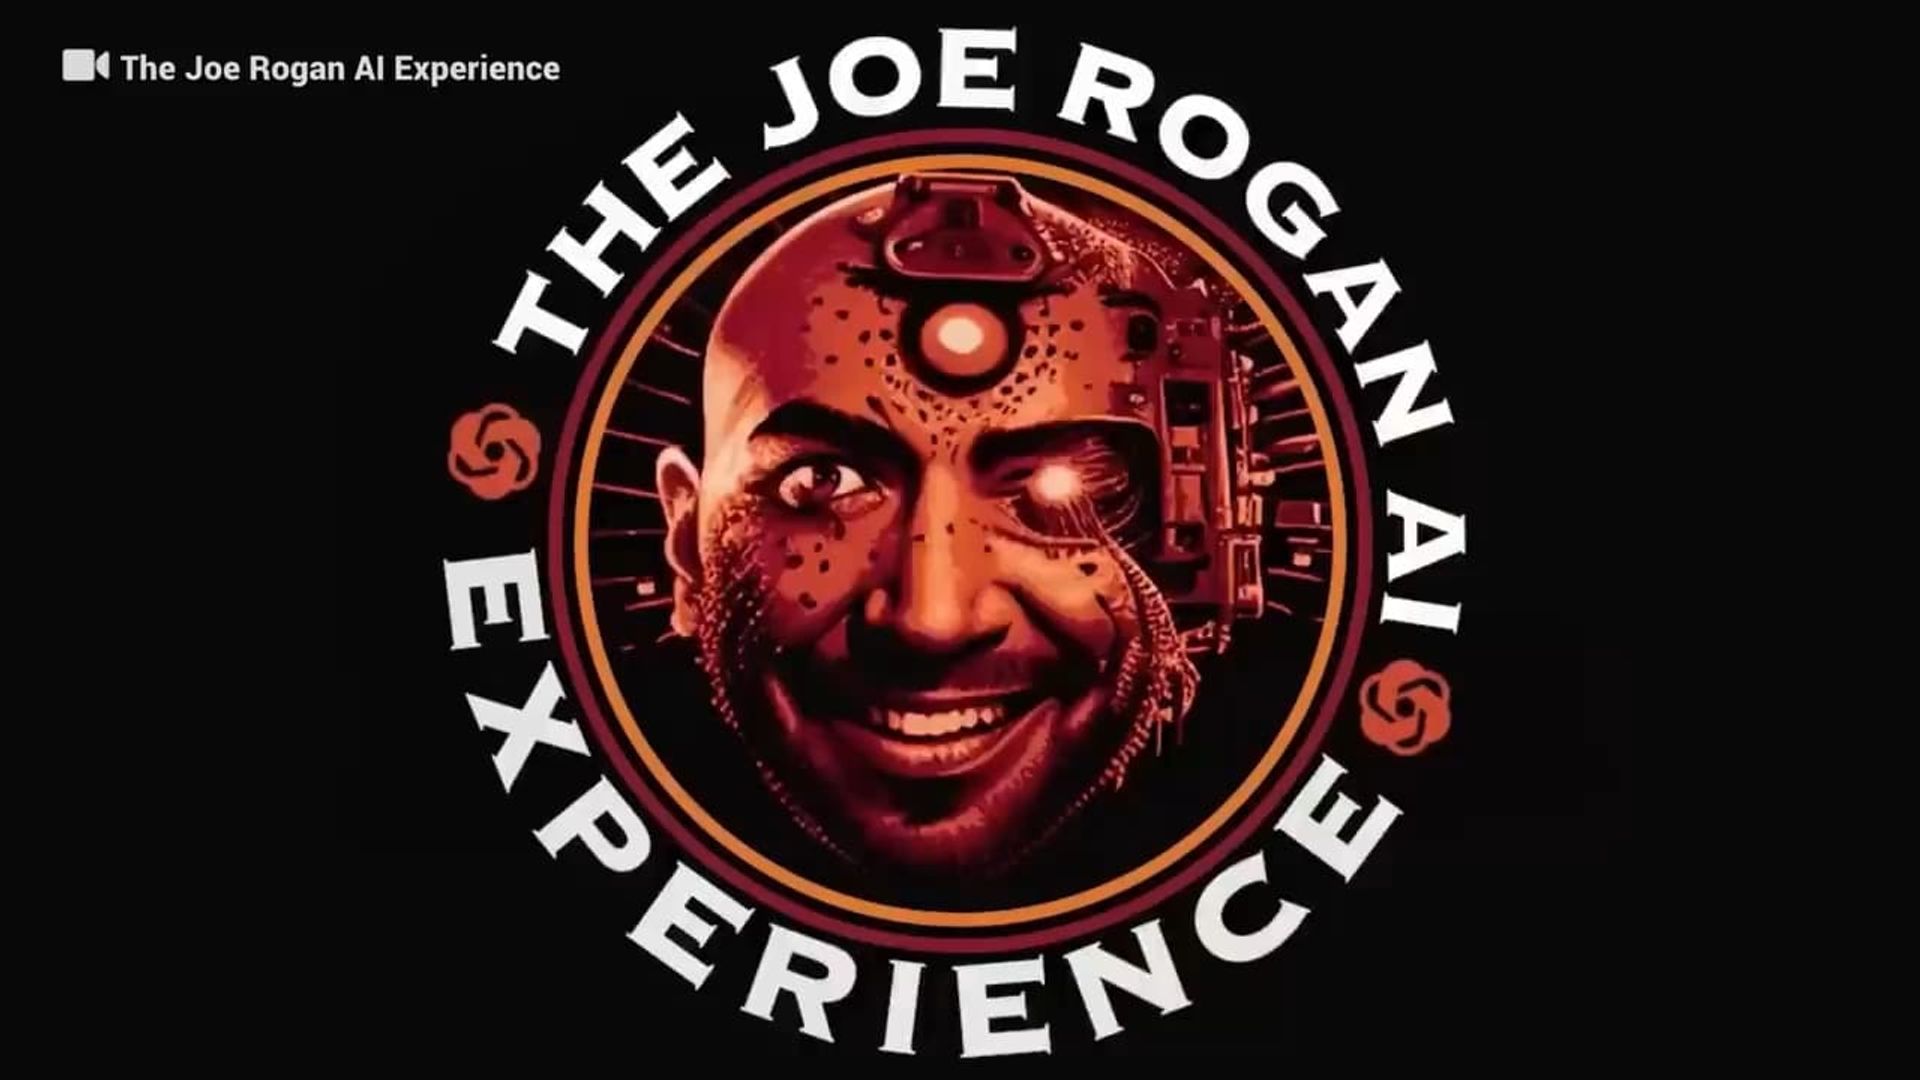 The Joe Rogan Experience background